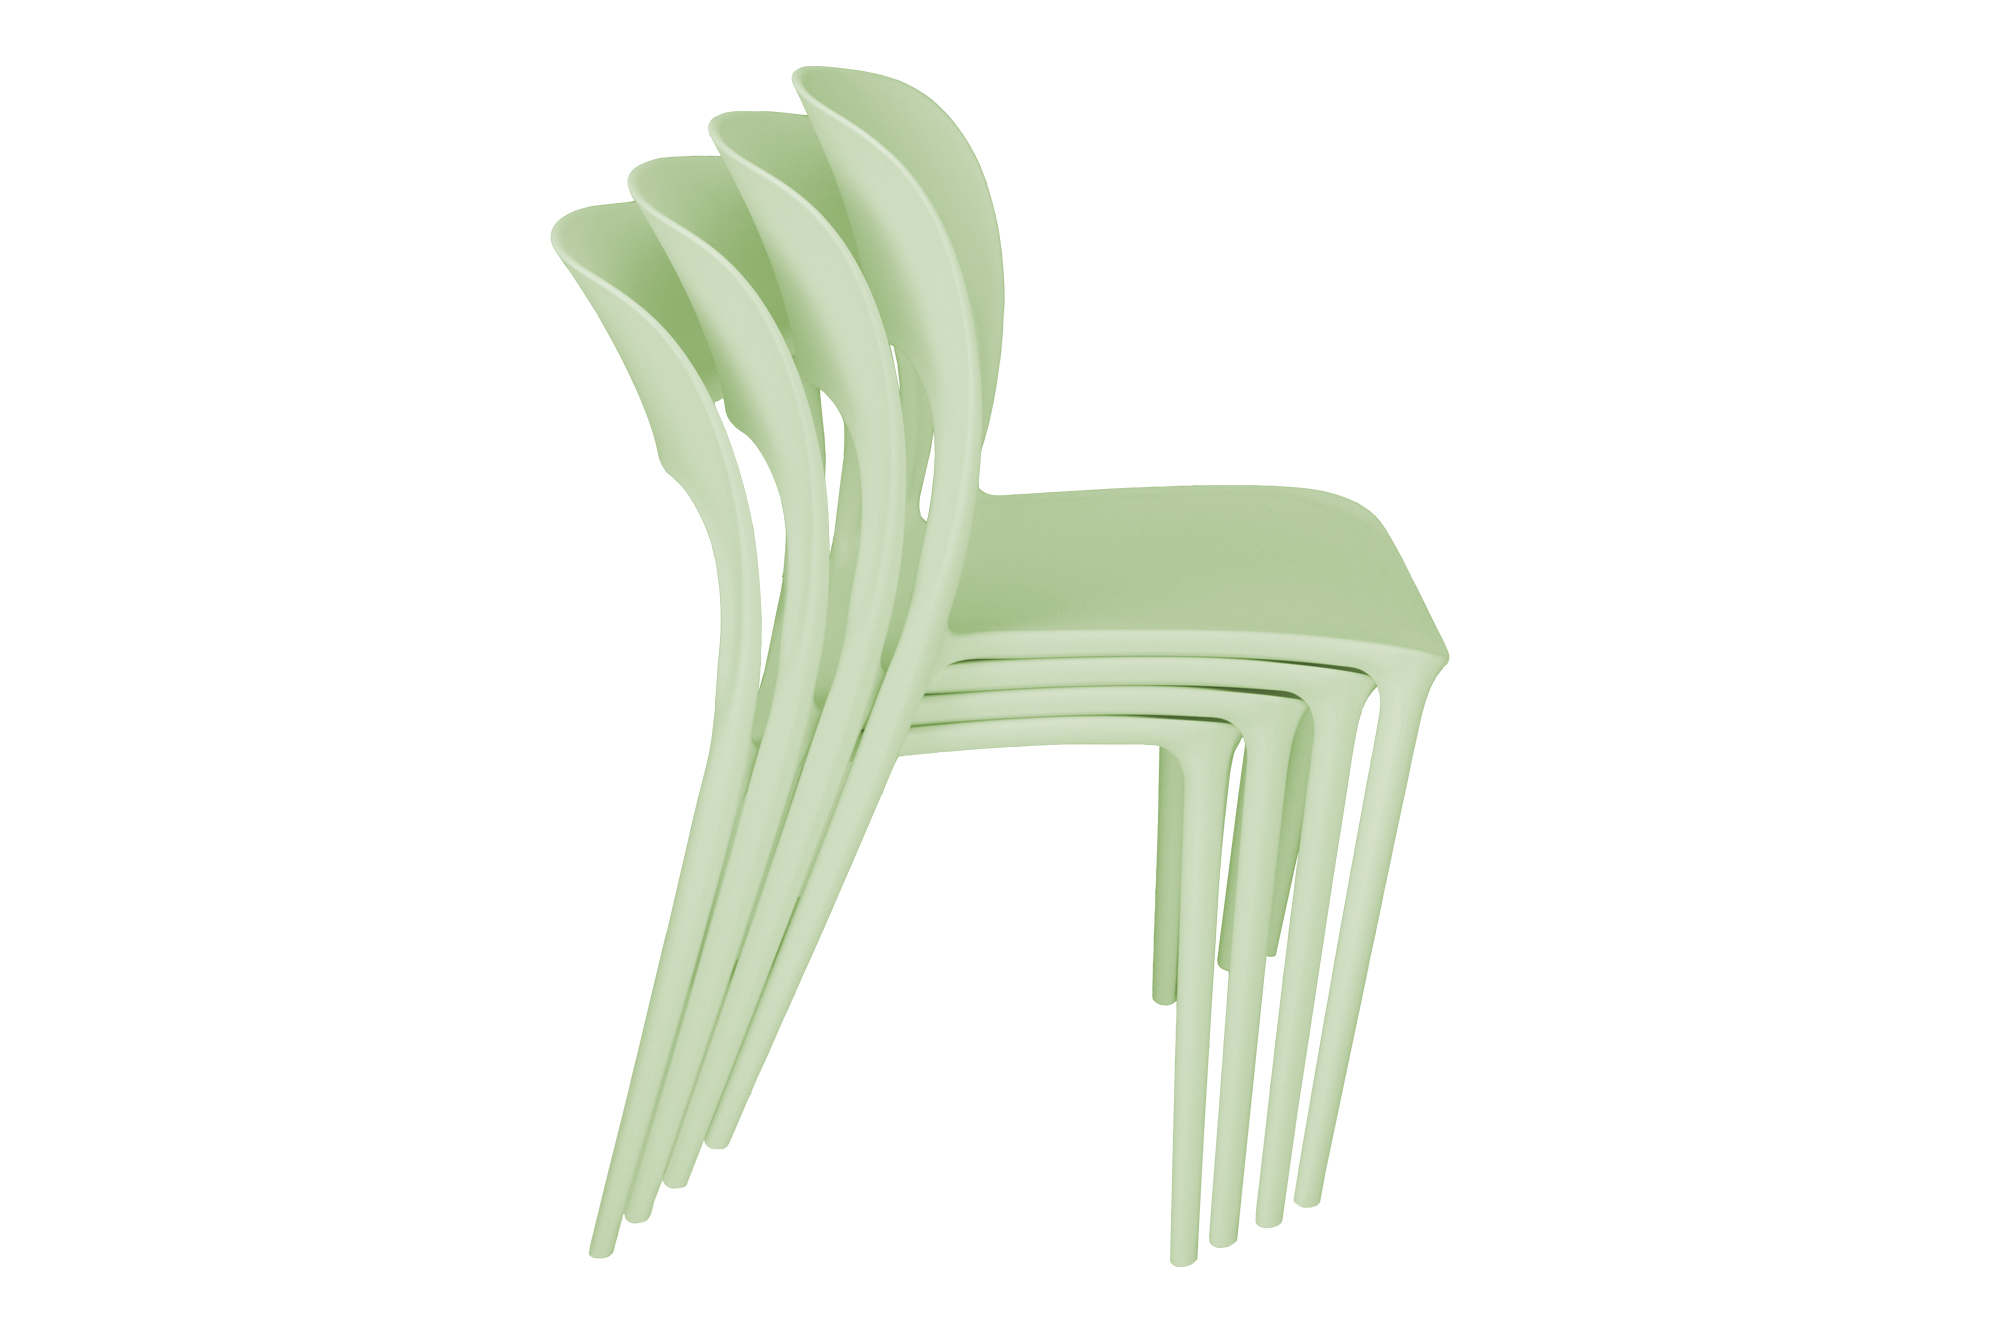 Sedia impilabile in polipropilene verde salvia mod. Maya – Samira